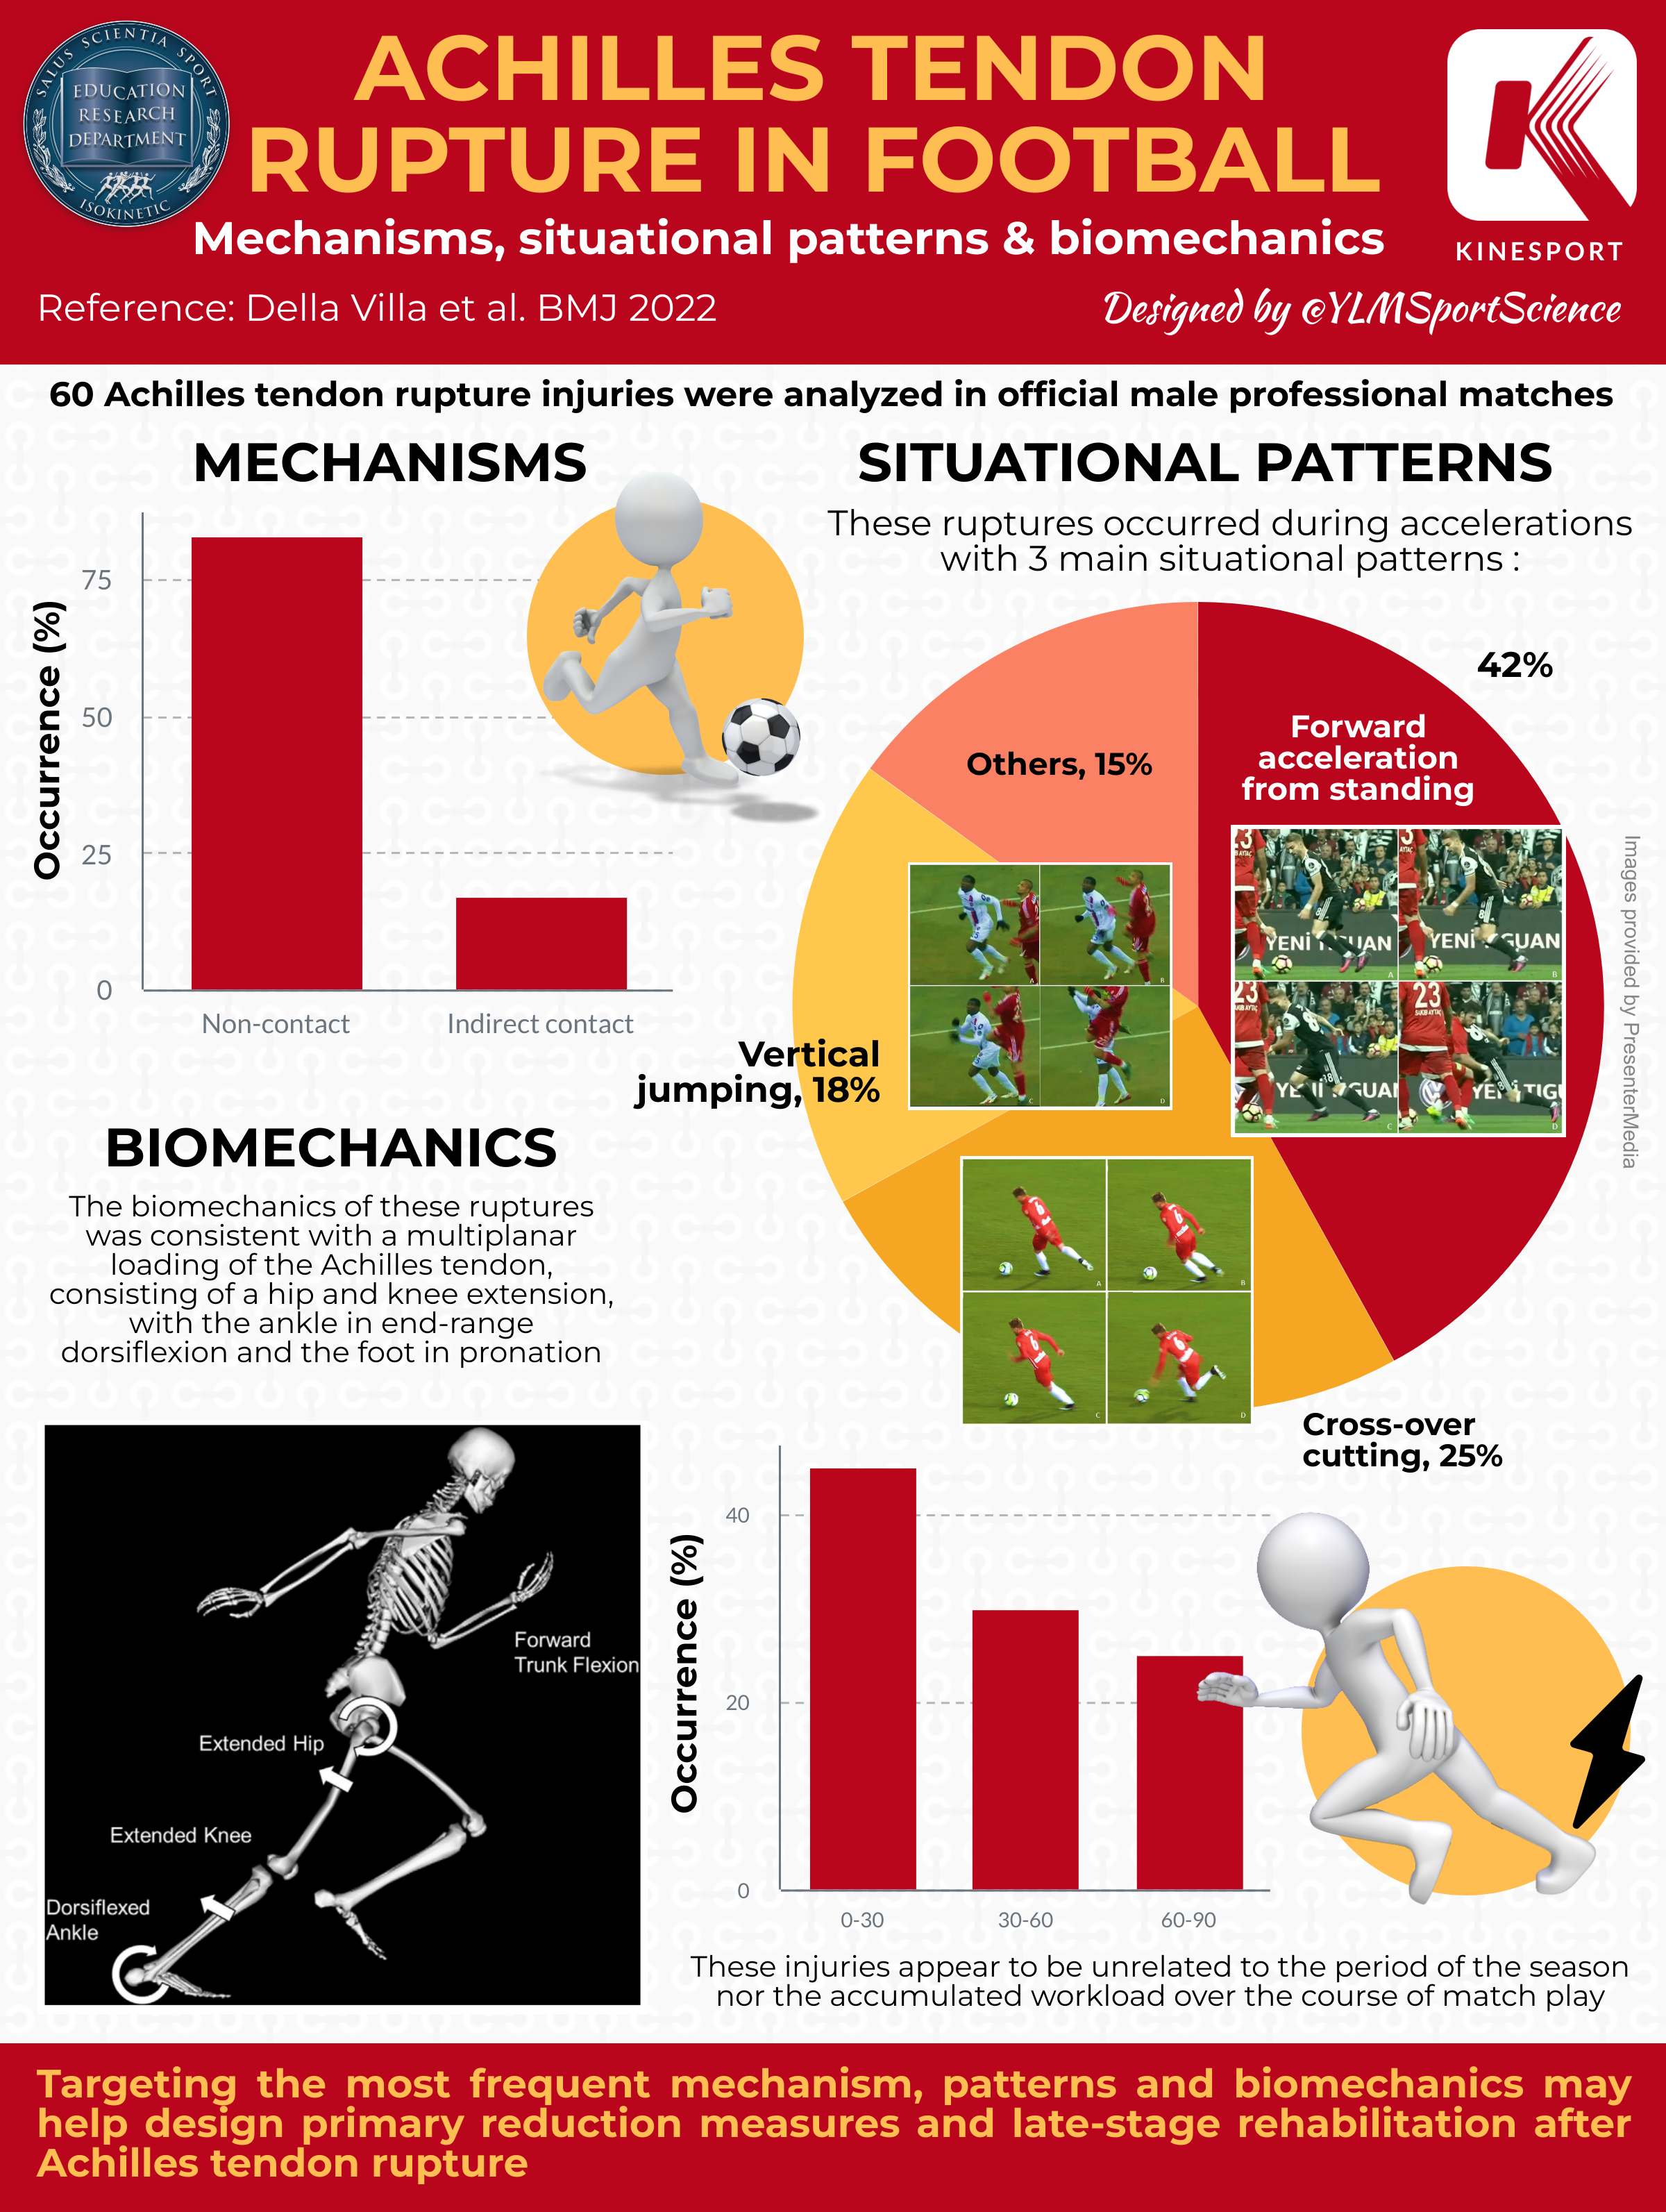 Achilles tendon rupture in football: injury mechanisms, patterns and biomechanics